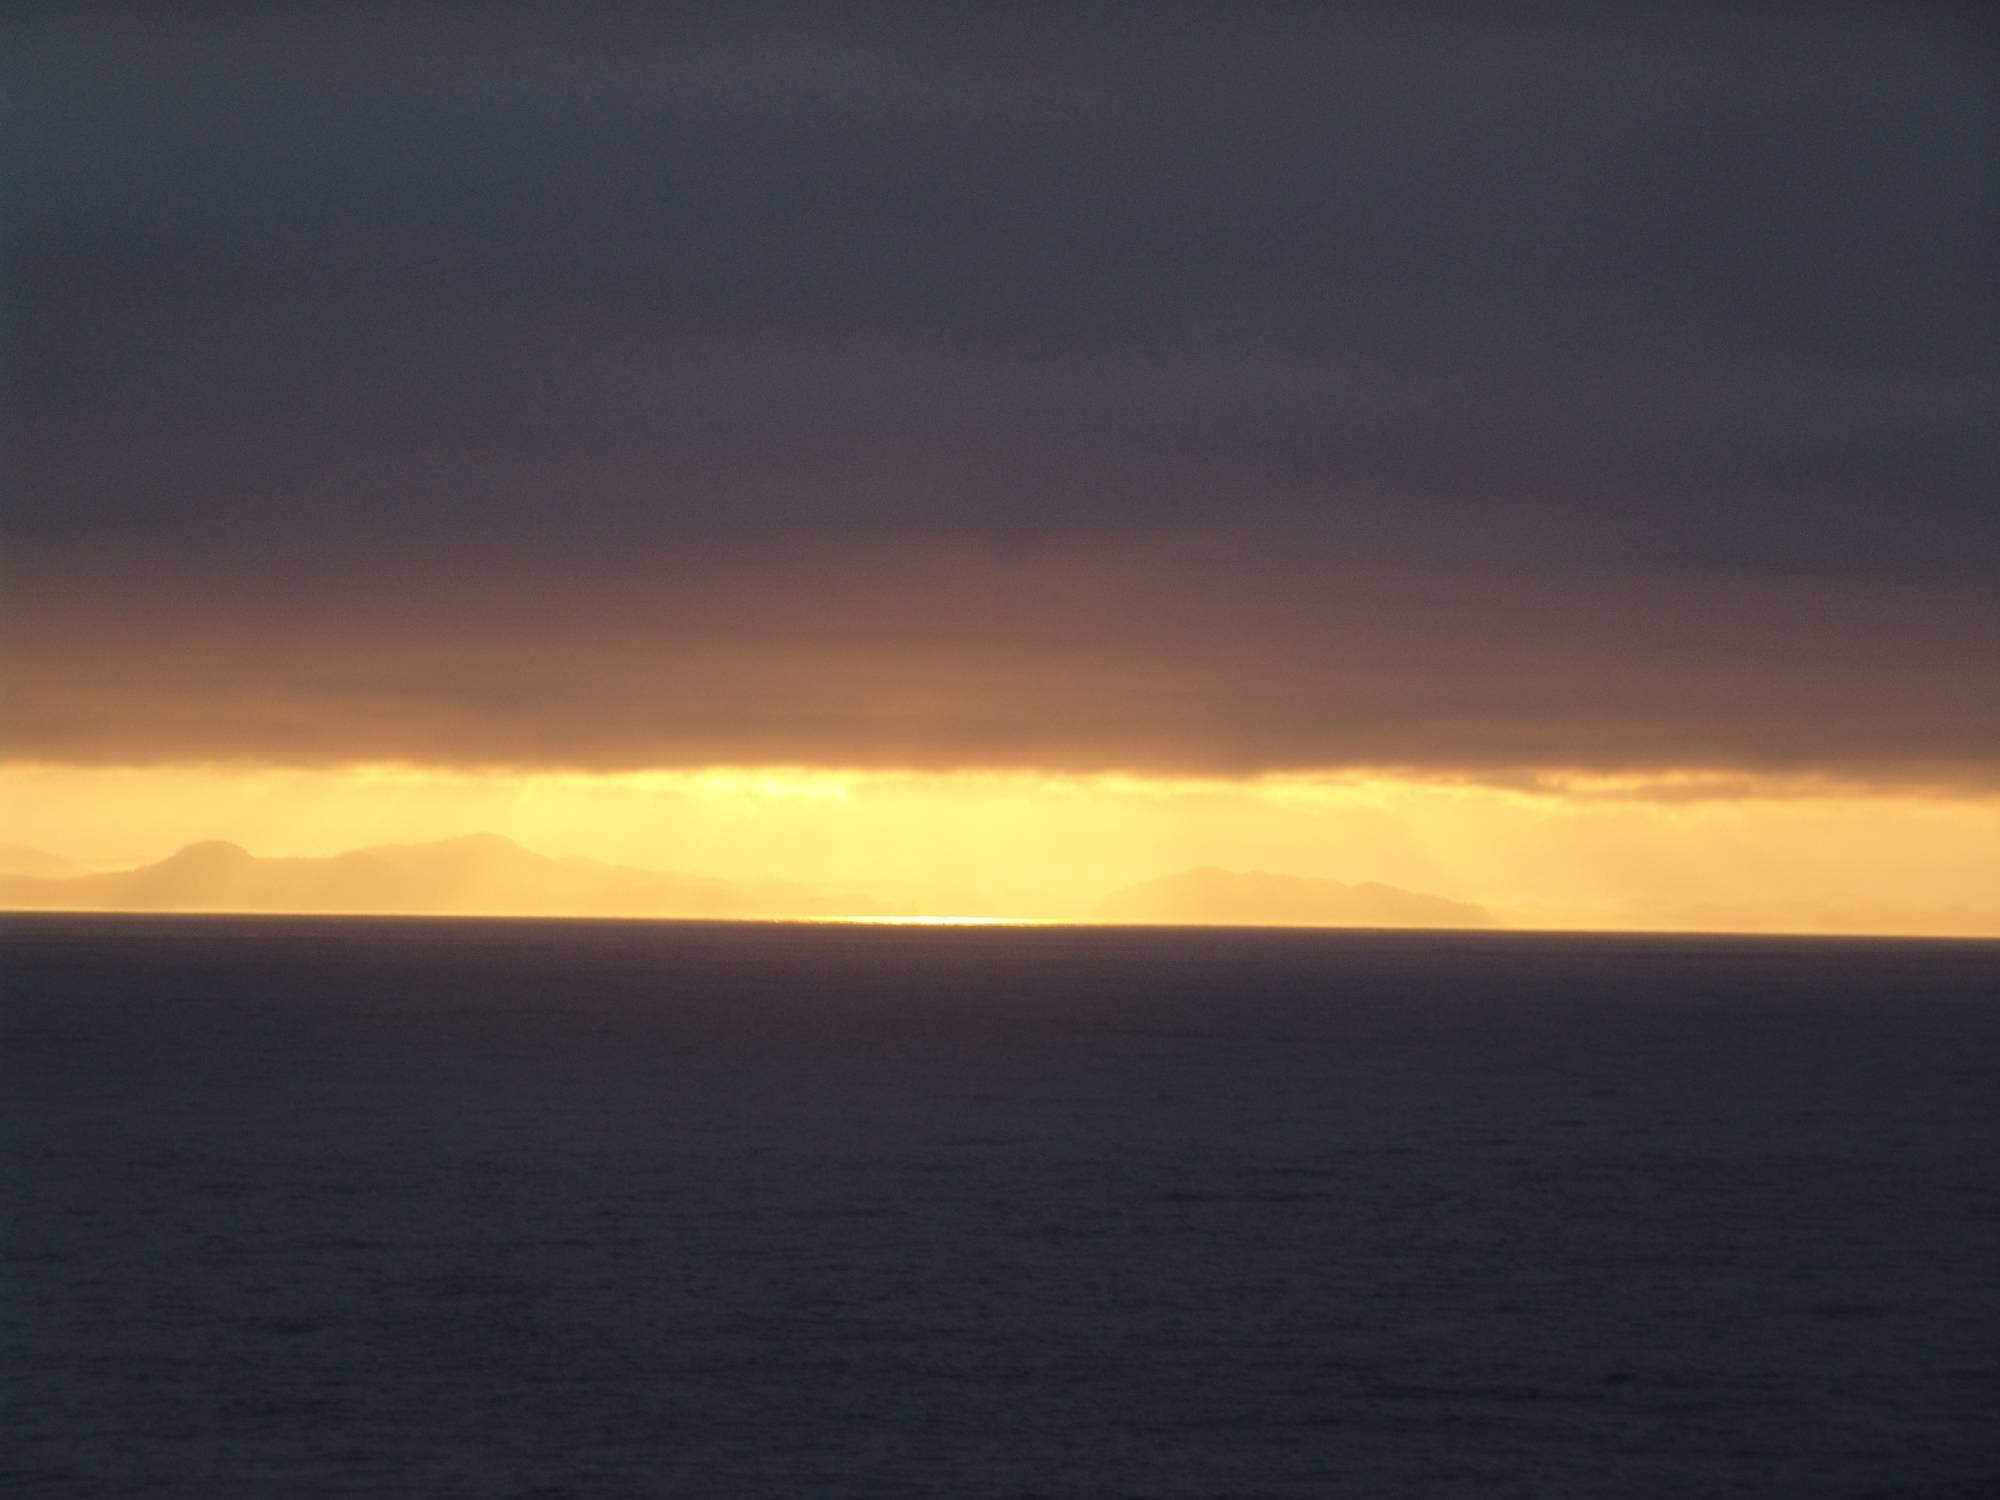 Alaska cruise - sunrise at sea